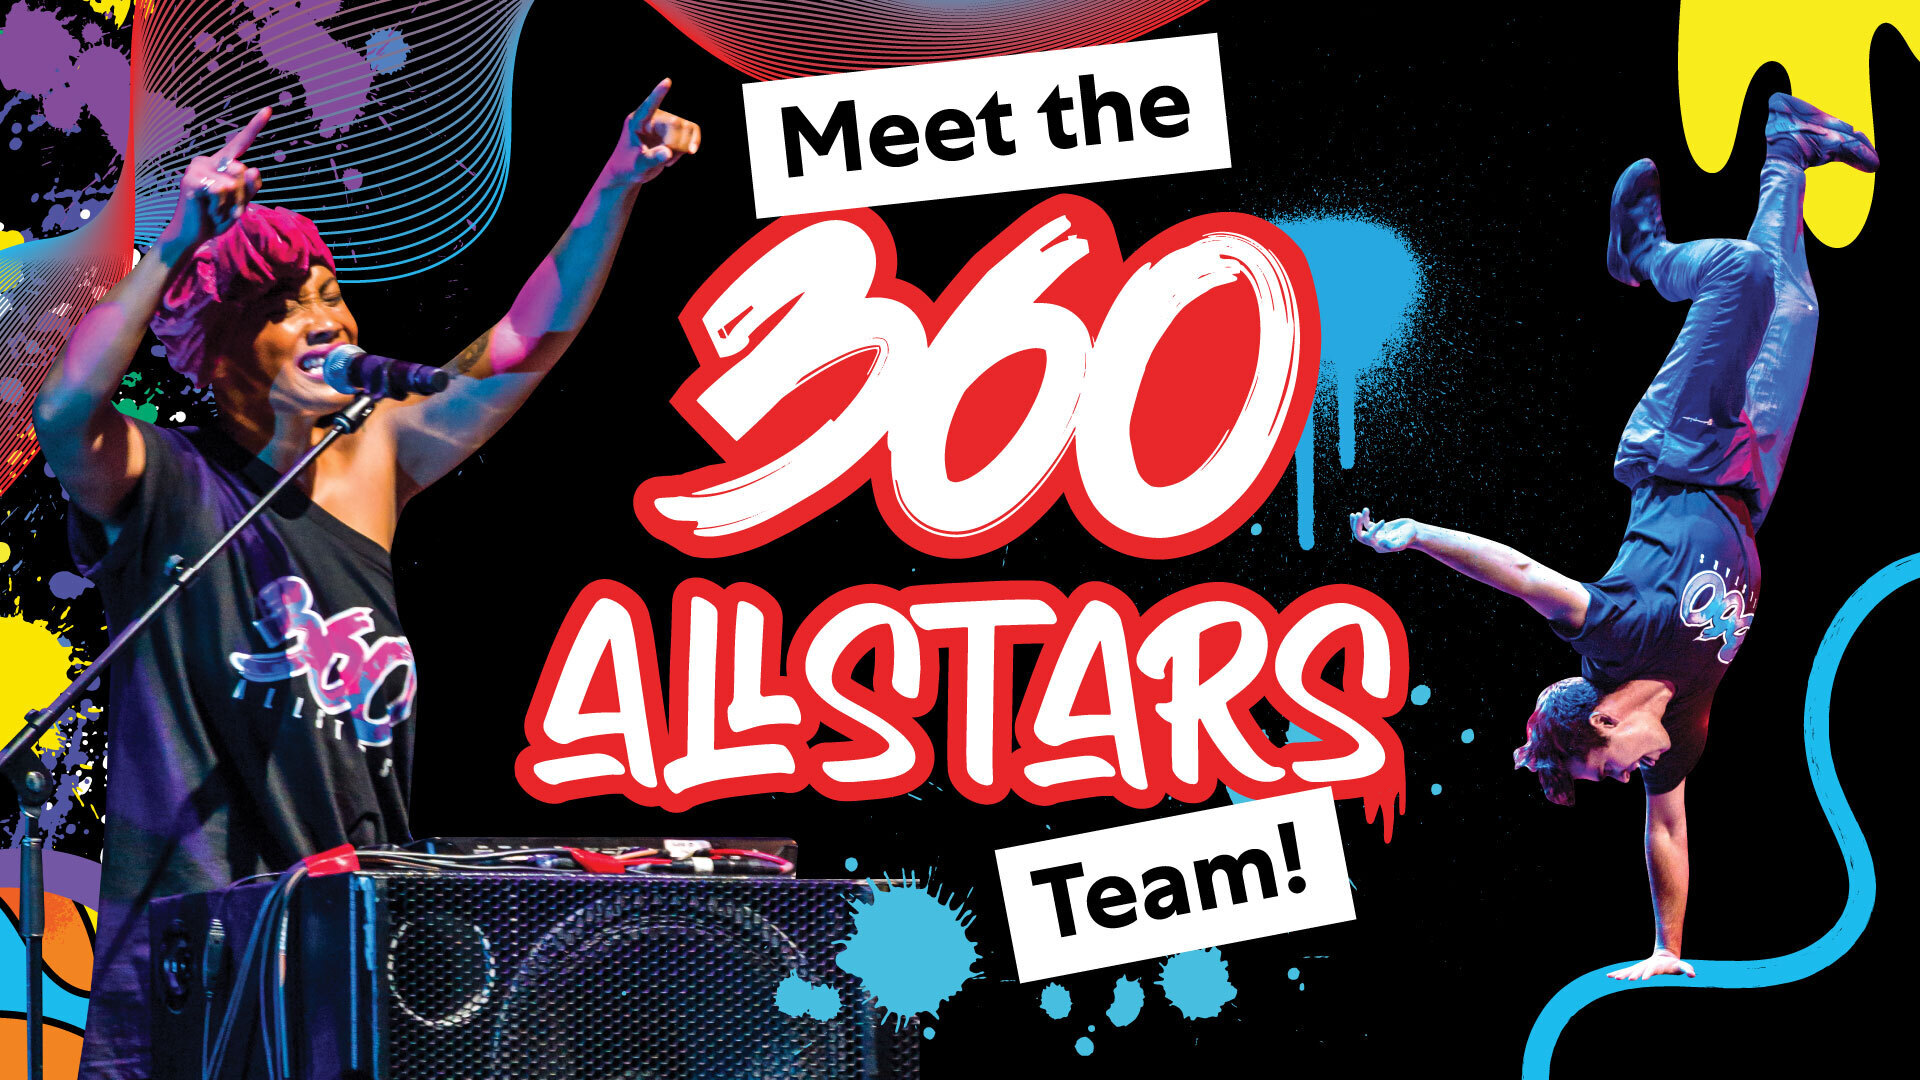 Meet the 360 ALLSTARS team